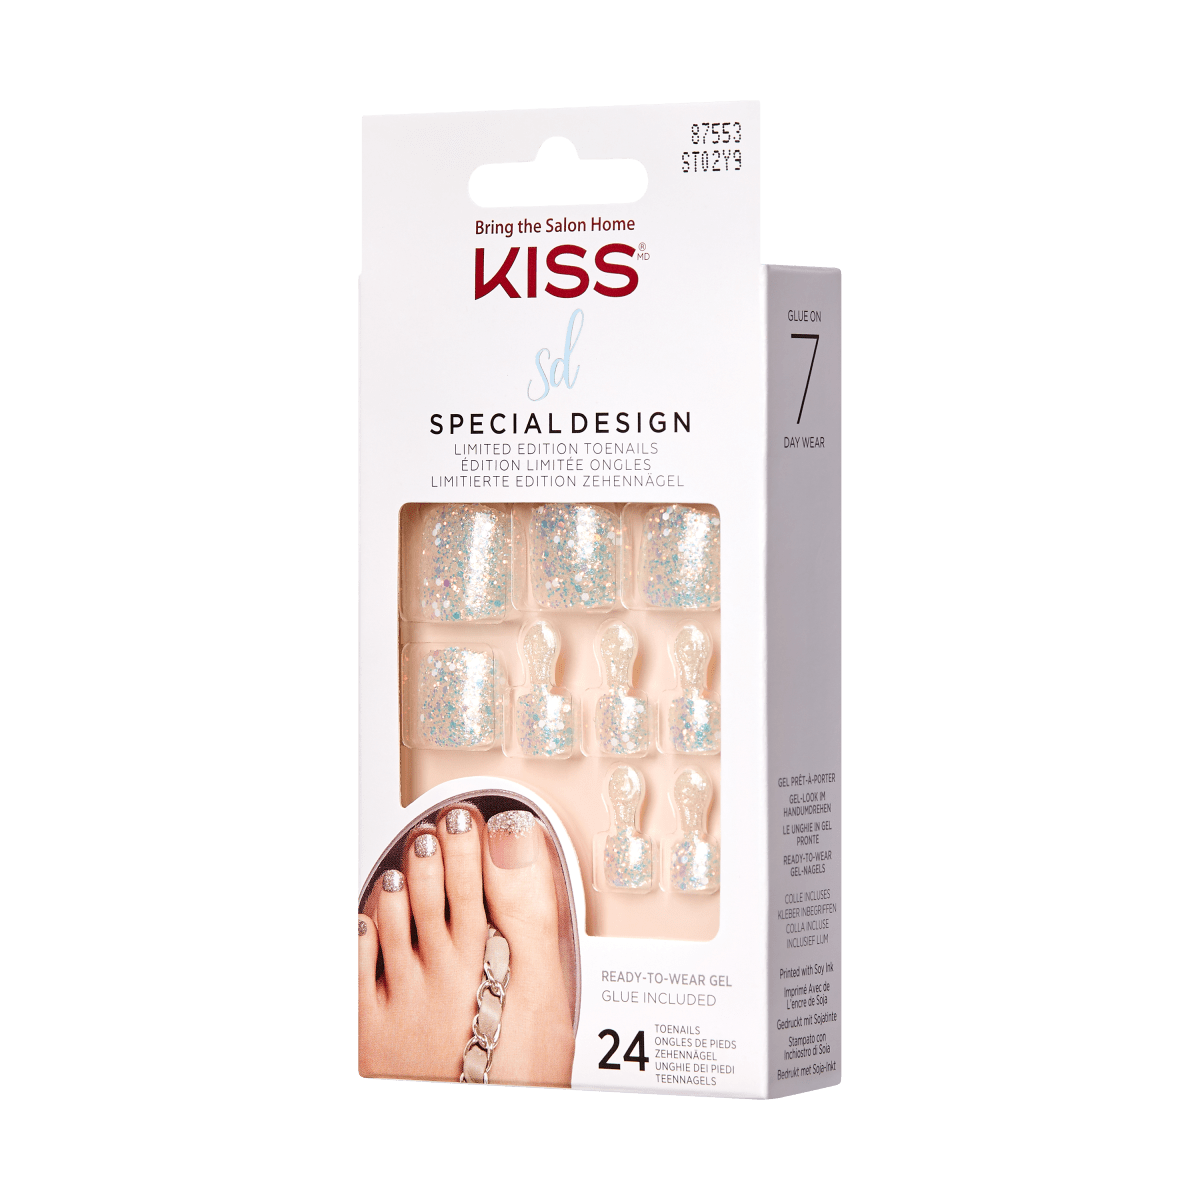 KISS Special Design Toenails - So Refreshing